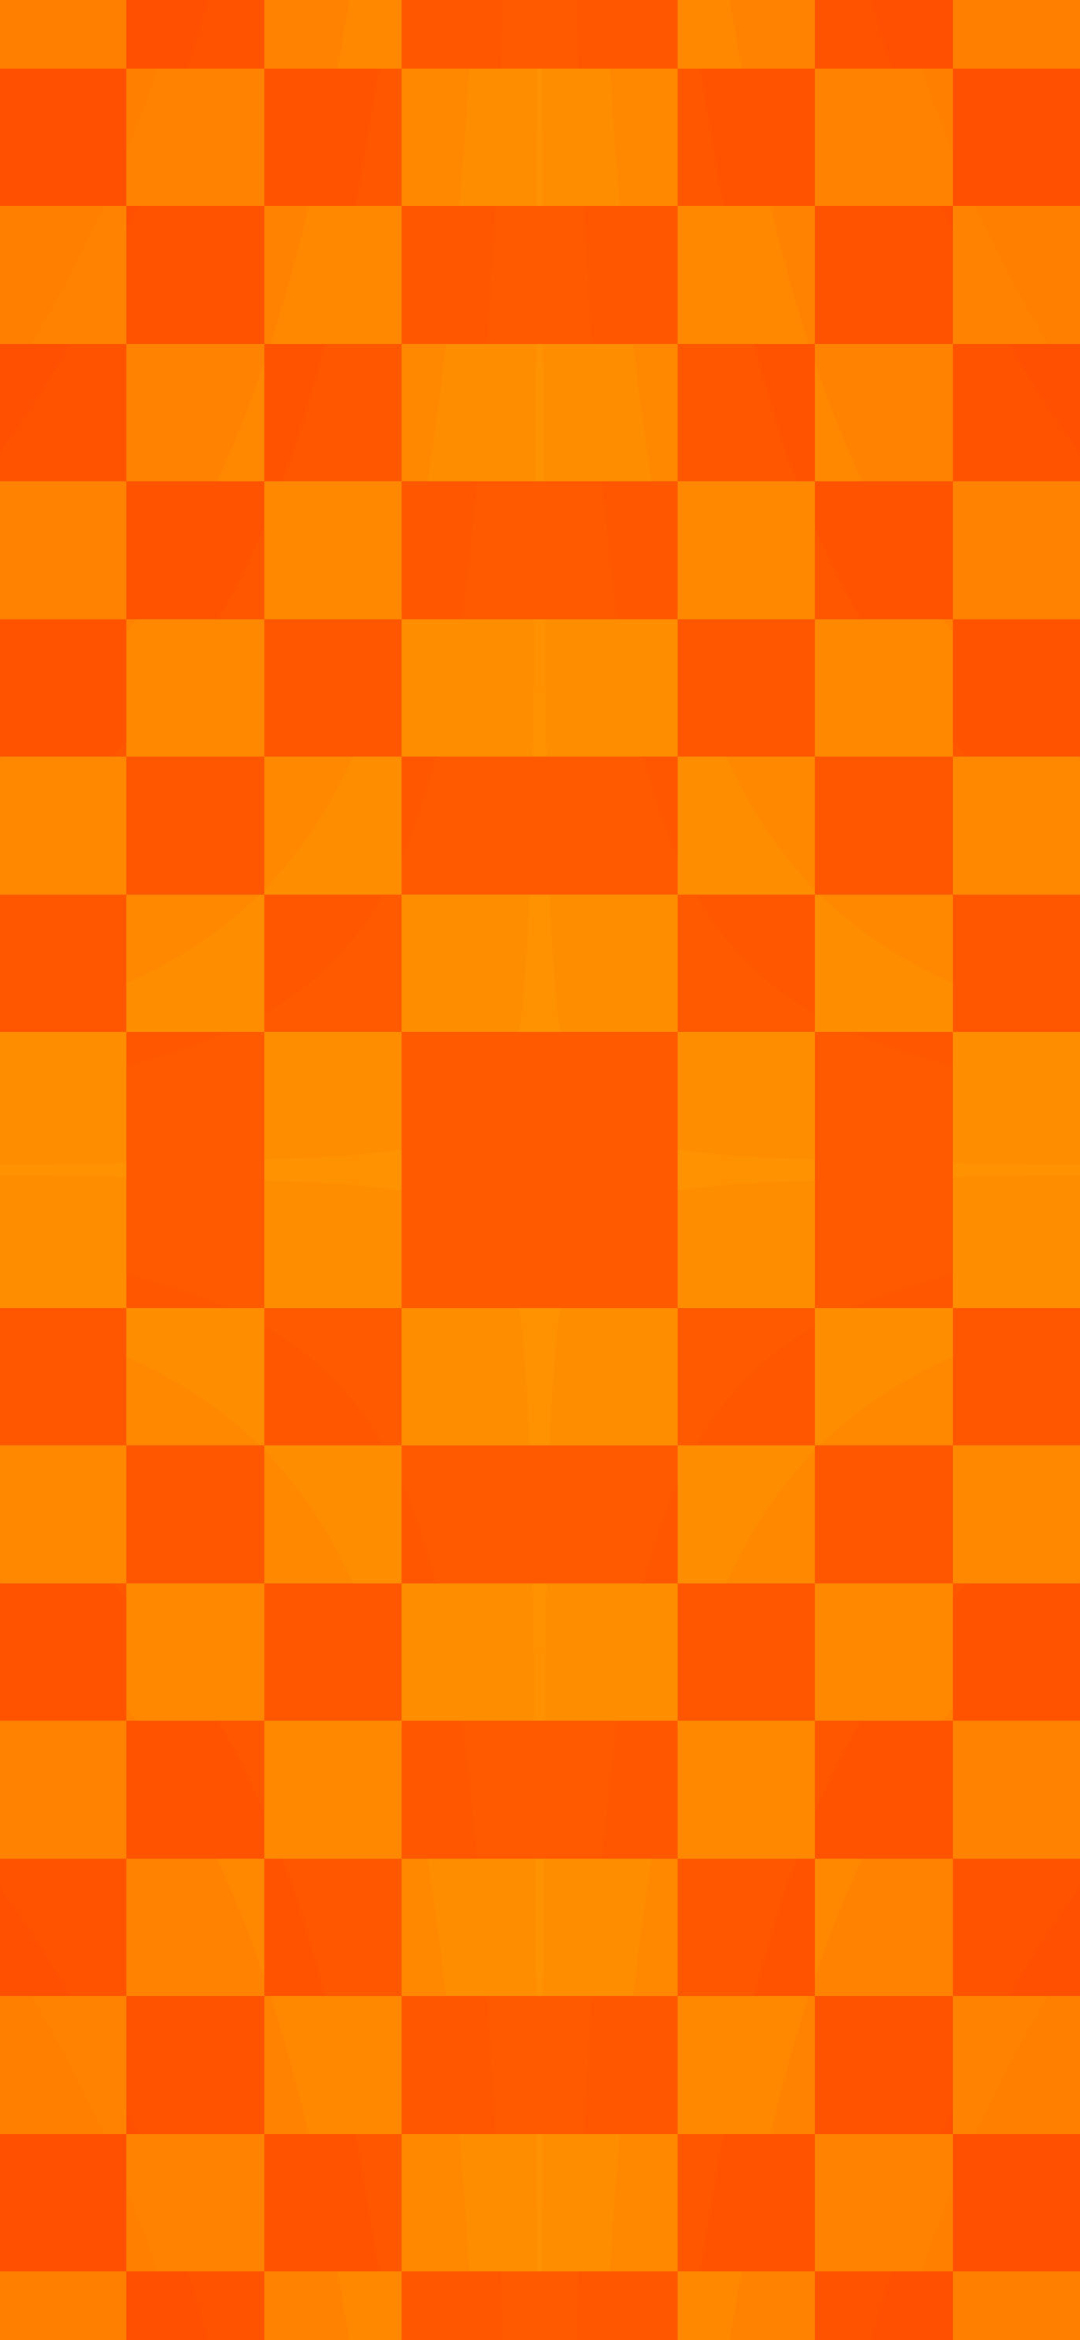 Orange board